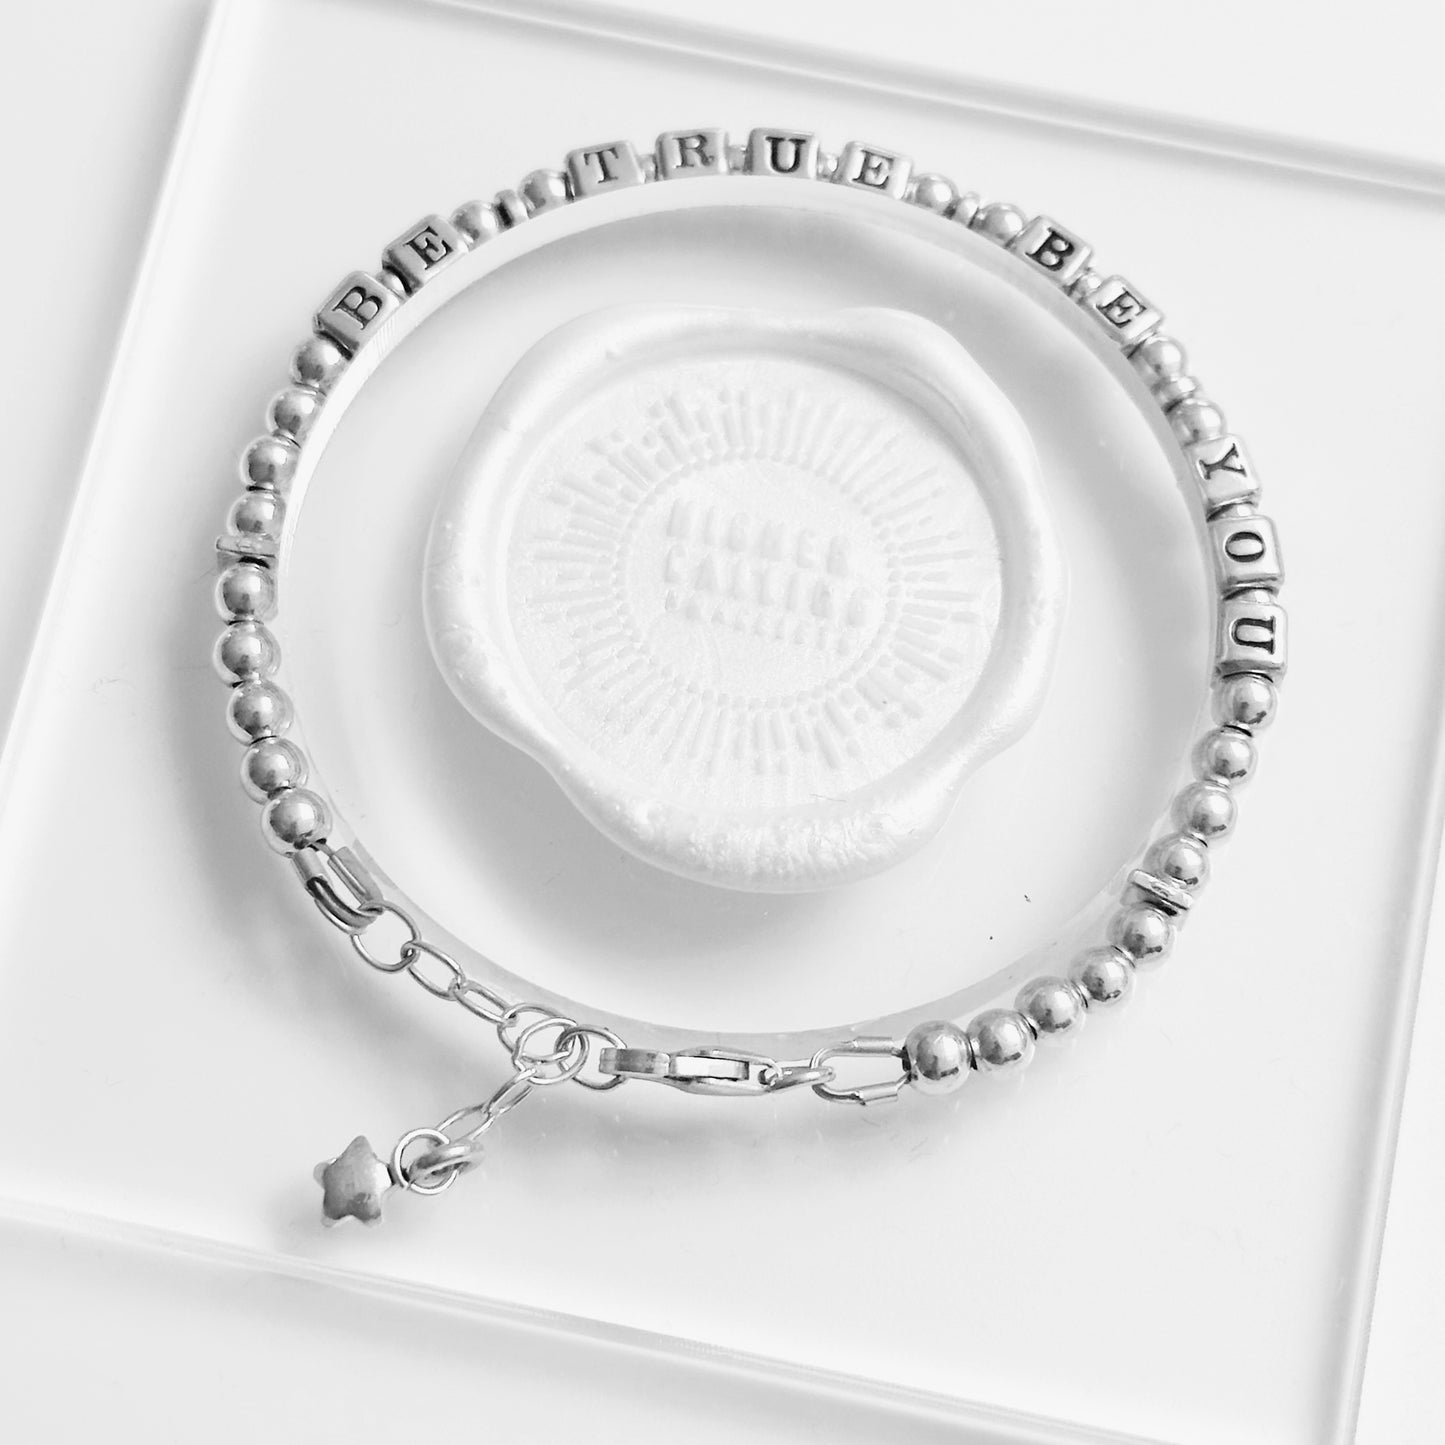 Graduation Bracelet Be True, Be You, Be Yourself sterling silver gift bracelet in beautiful packaging